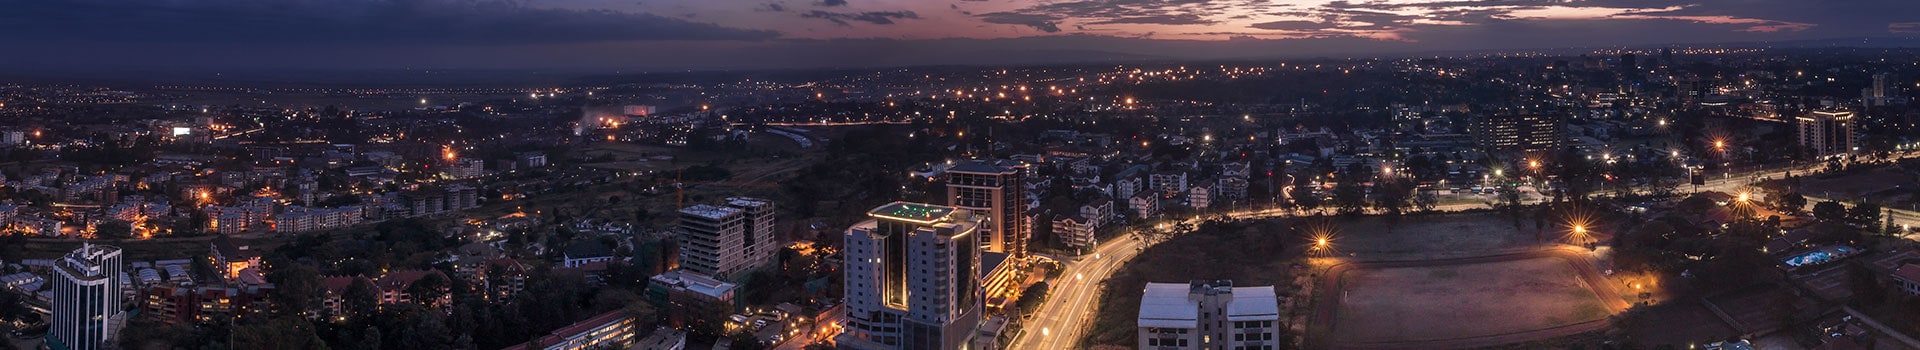 Amesterdao - Nairobi